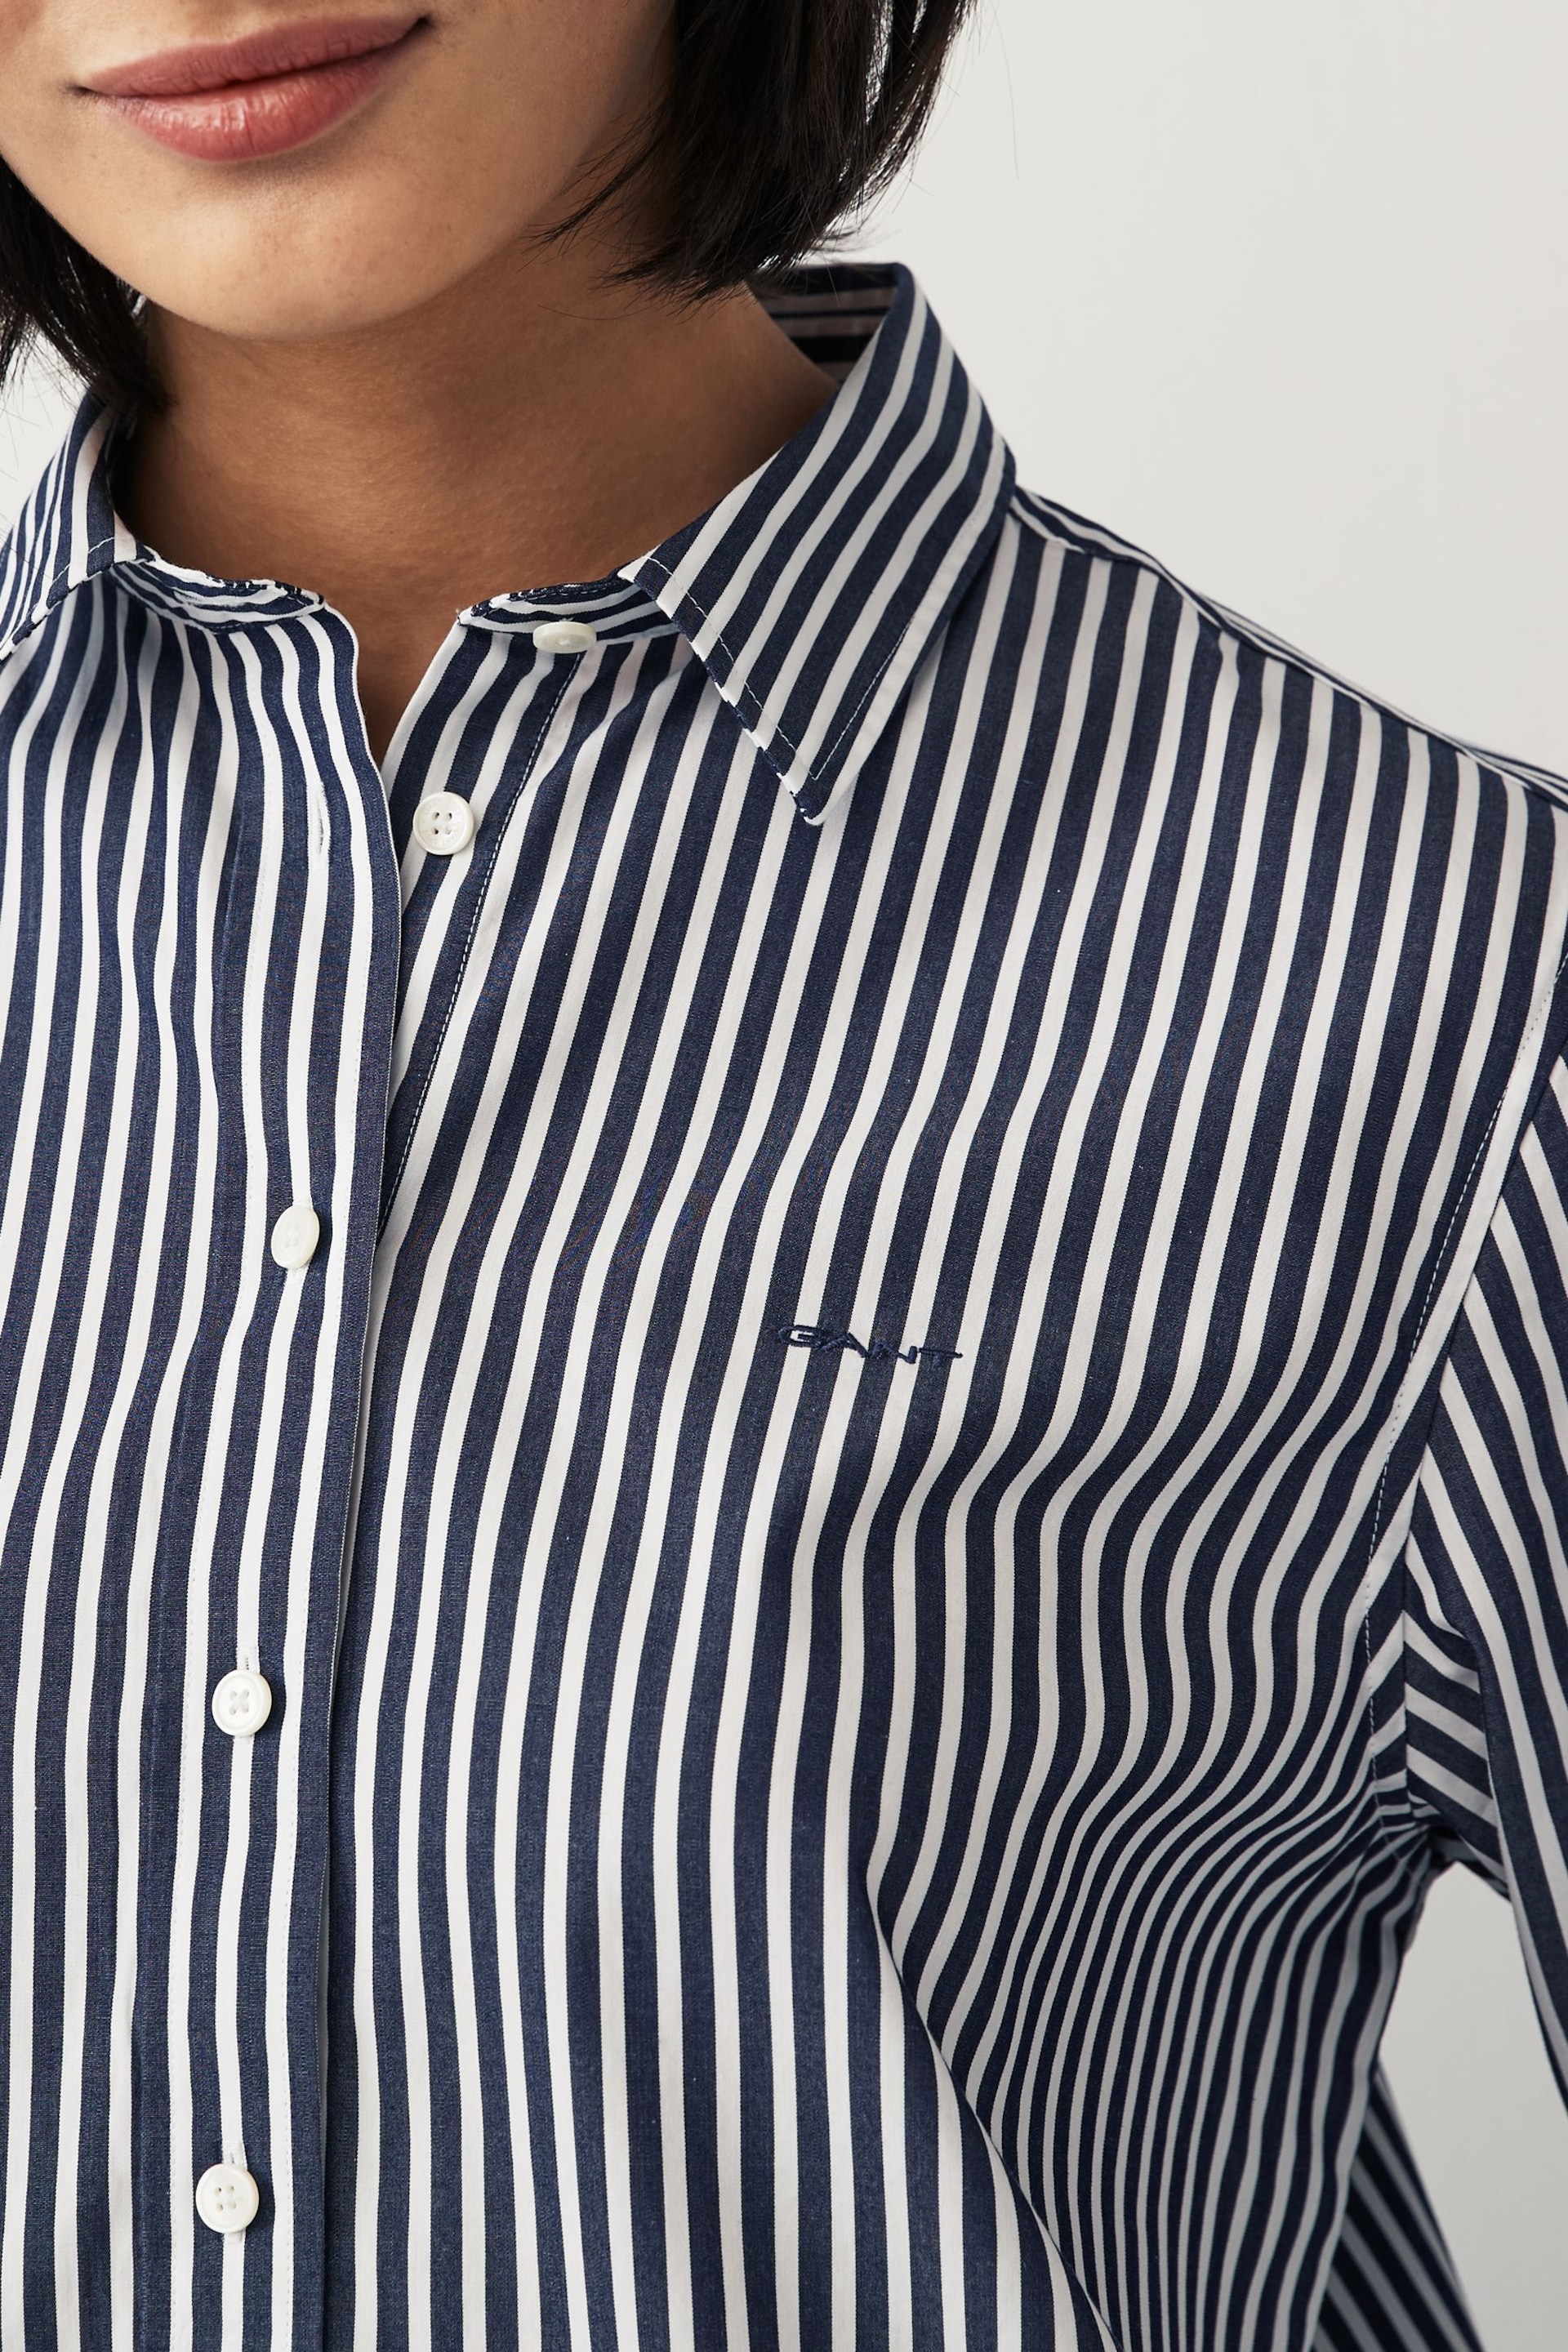 GANT Blue Poplin Striped Shirt - Image 7 of 8